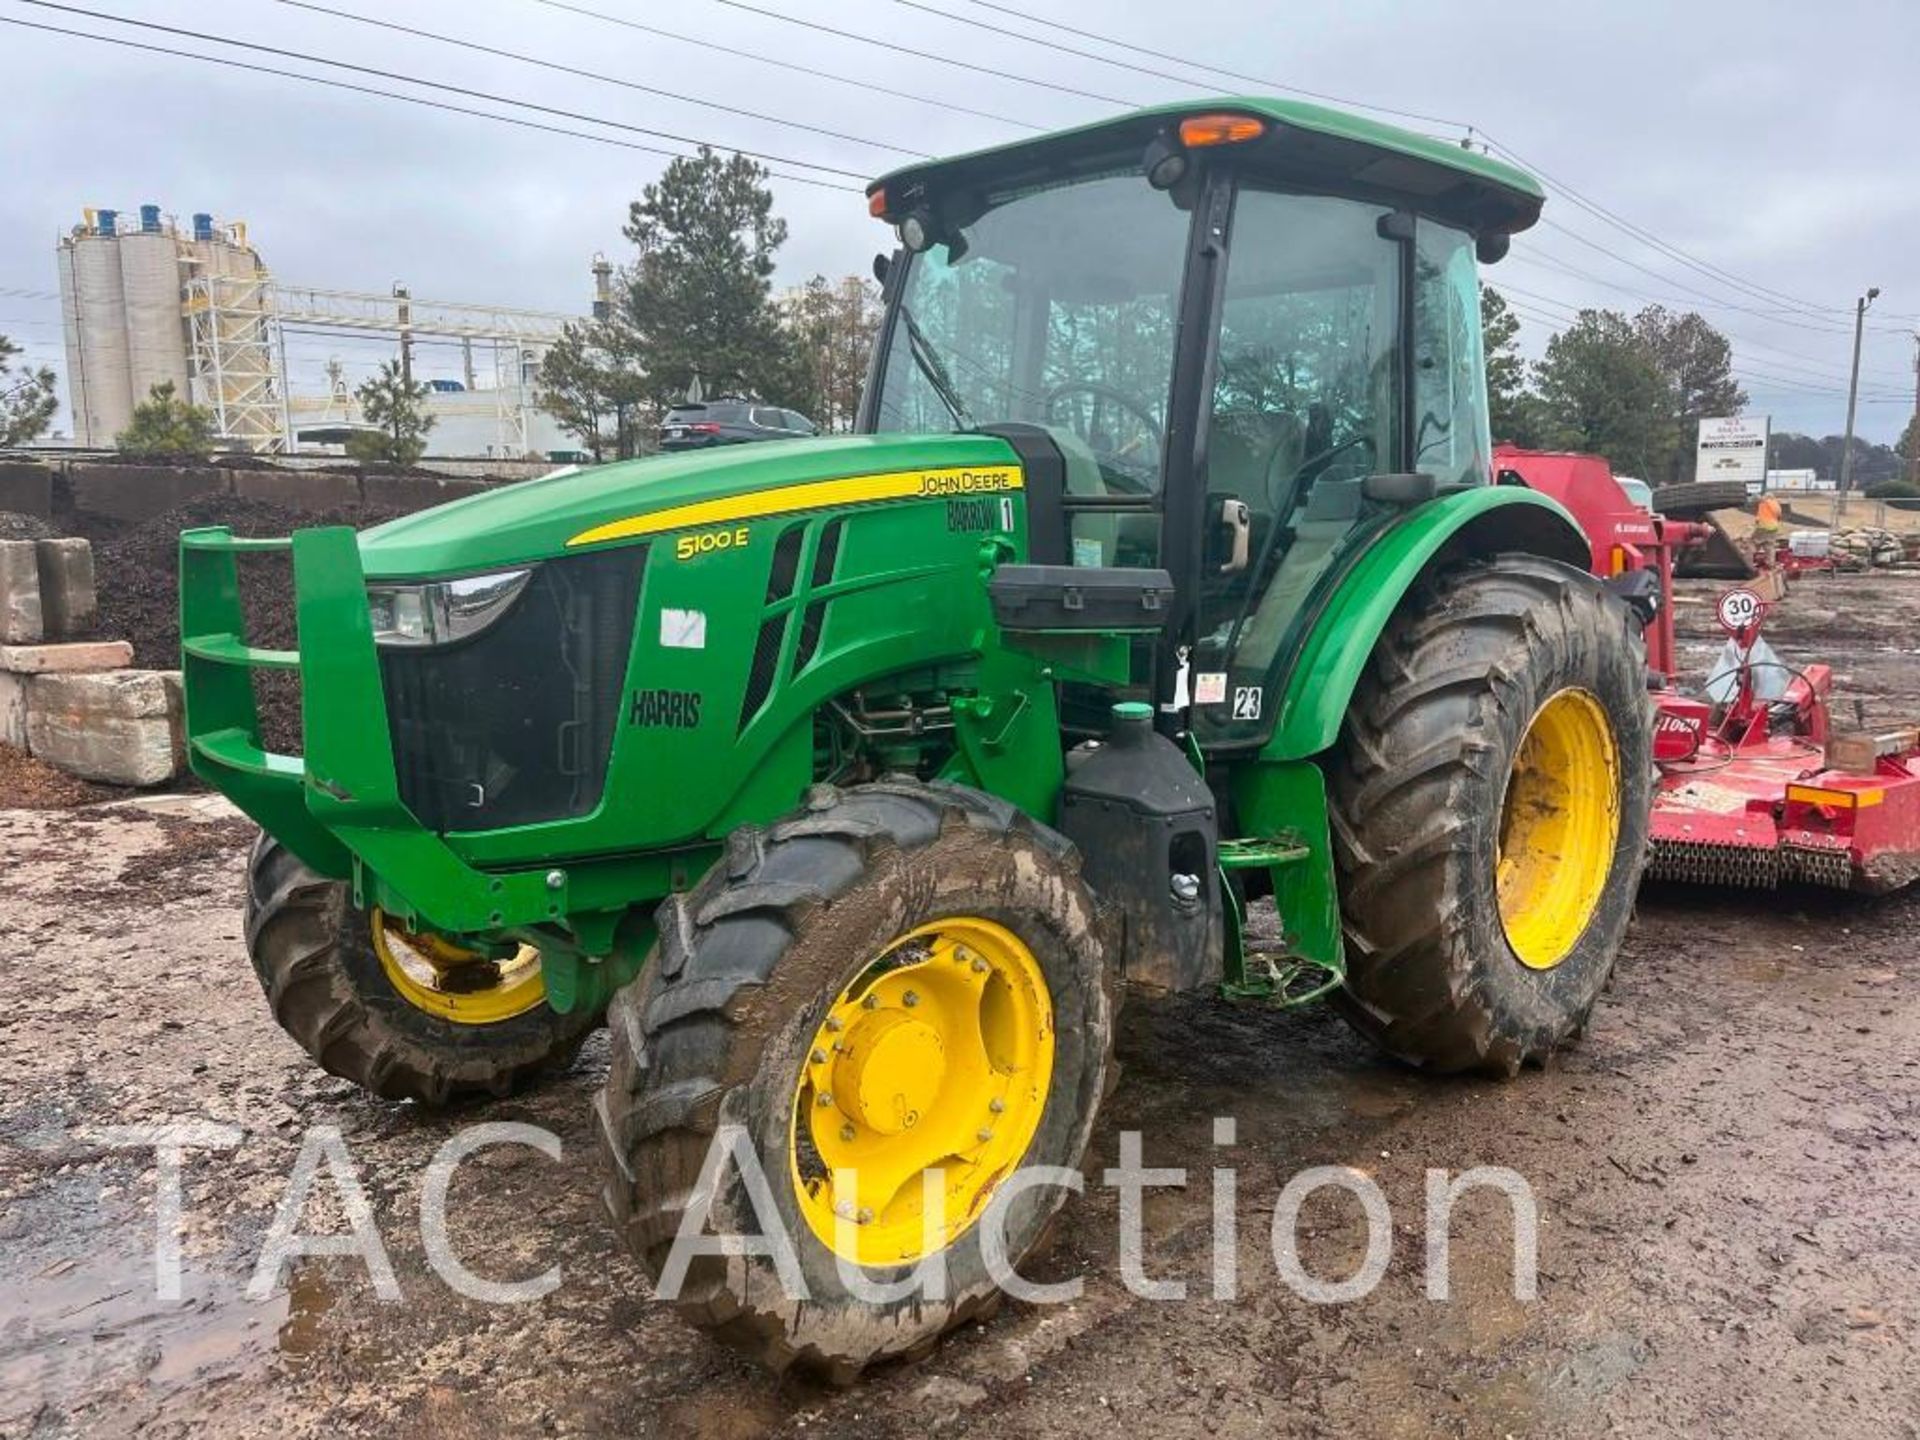 2018 John Deere 5100E 4x4 Tractor - Image 3 of 30